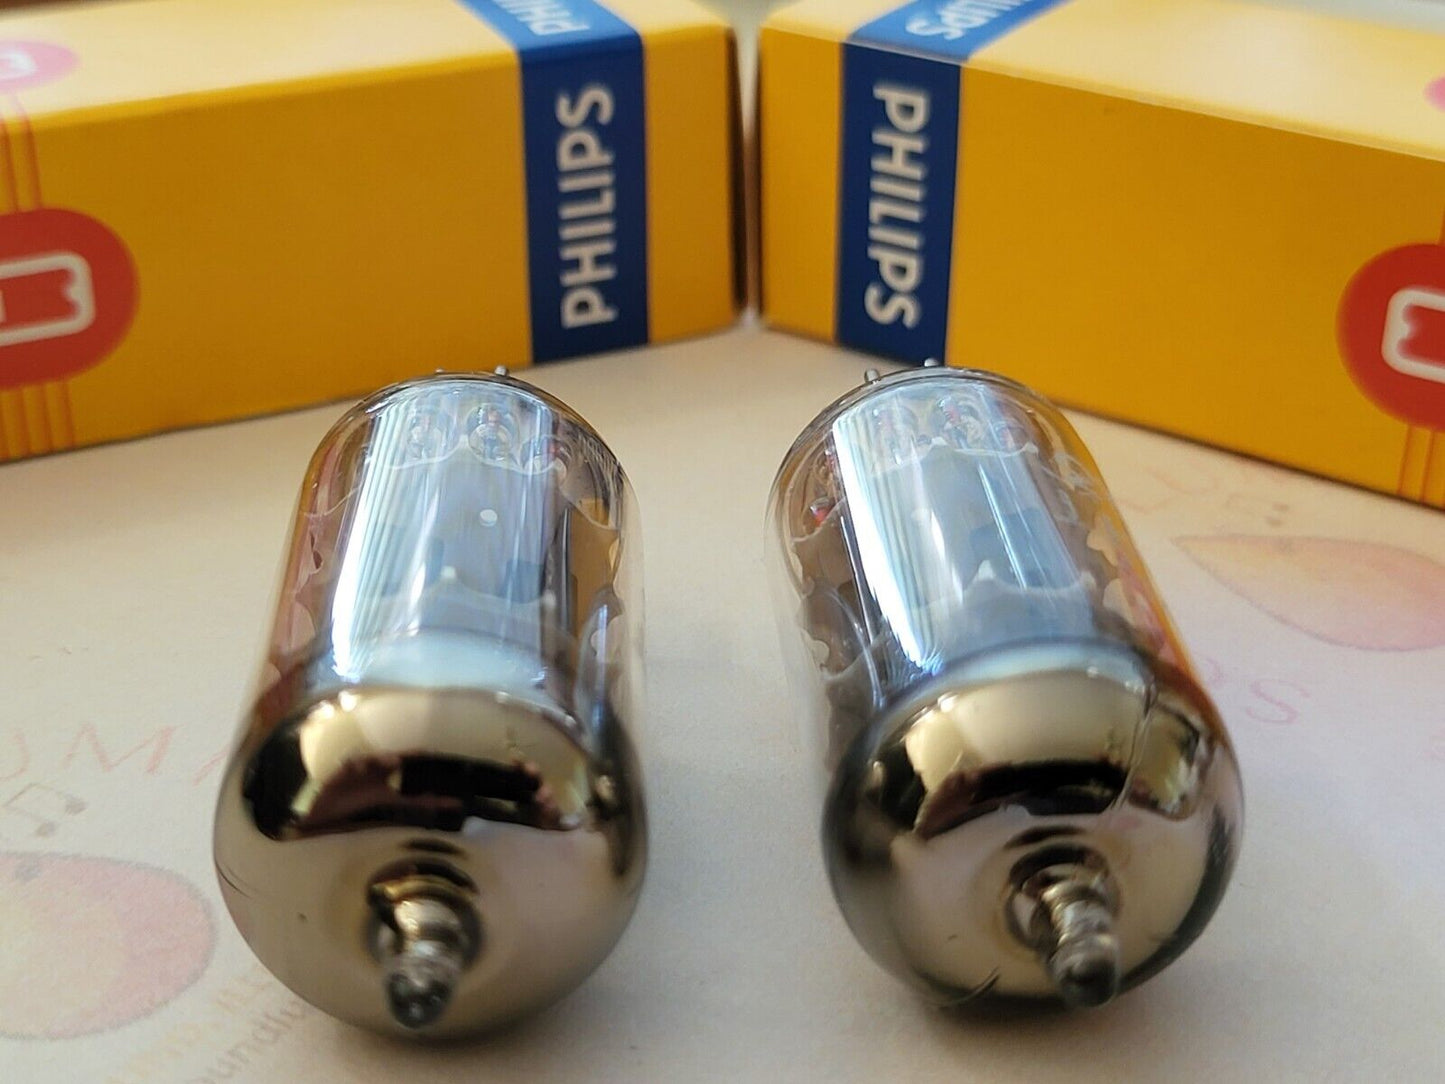 Philips Miniwatt 12AX7 ECC83 Matched Pair Original Boxes - Holland 1964 I65 -NOS